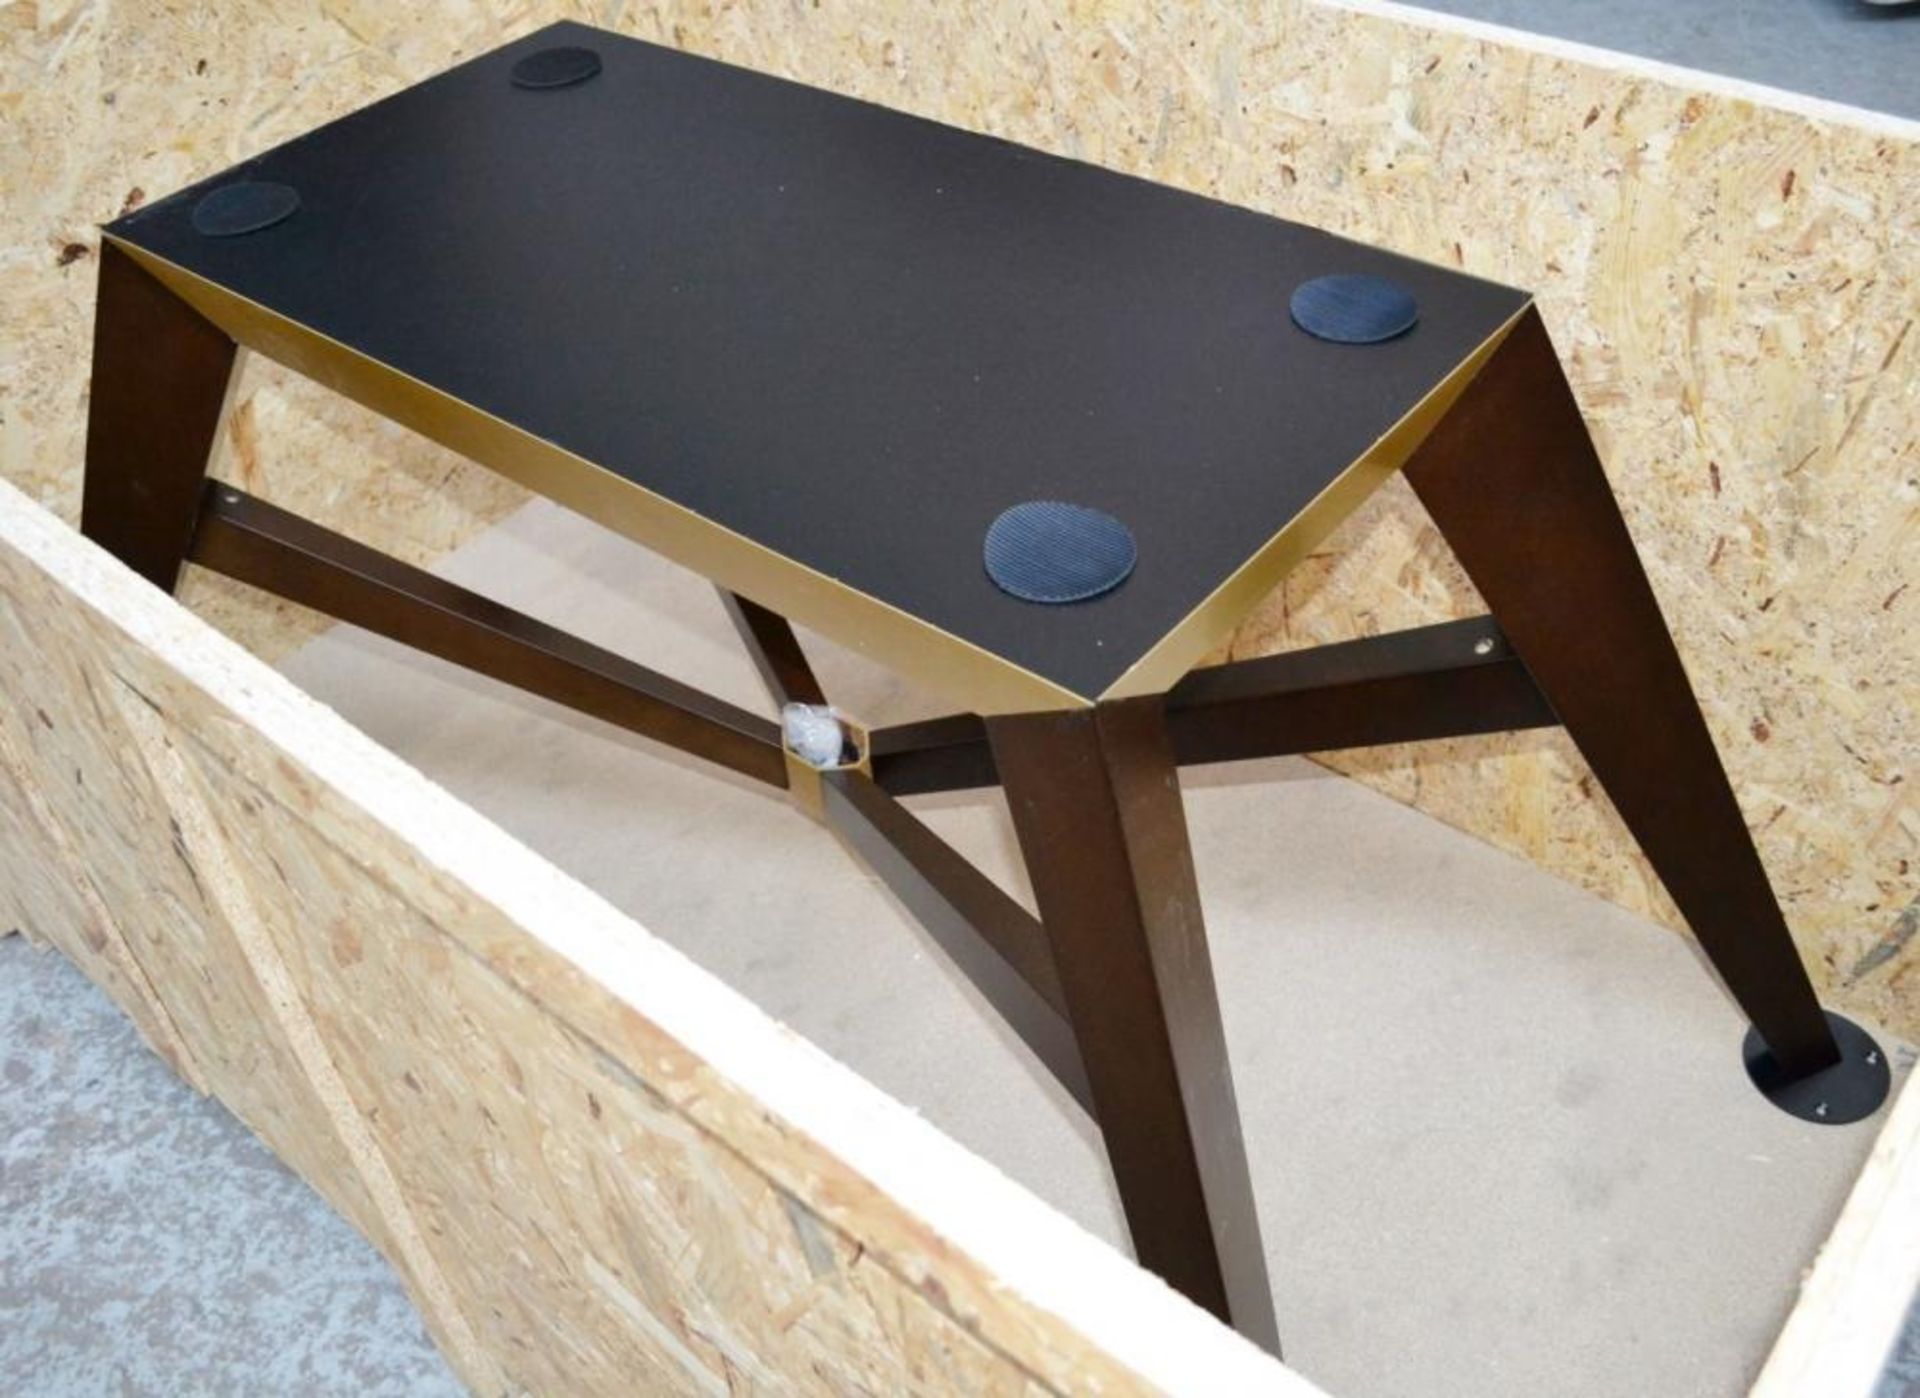 1 x PORADA Ellington Dining Table (Base Only) - Ref: 5568978 - Dimensions: W160 x D88 x H71cm - CL01 - Image 2 of 5